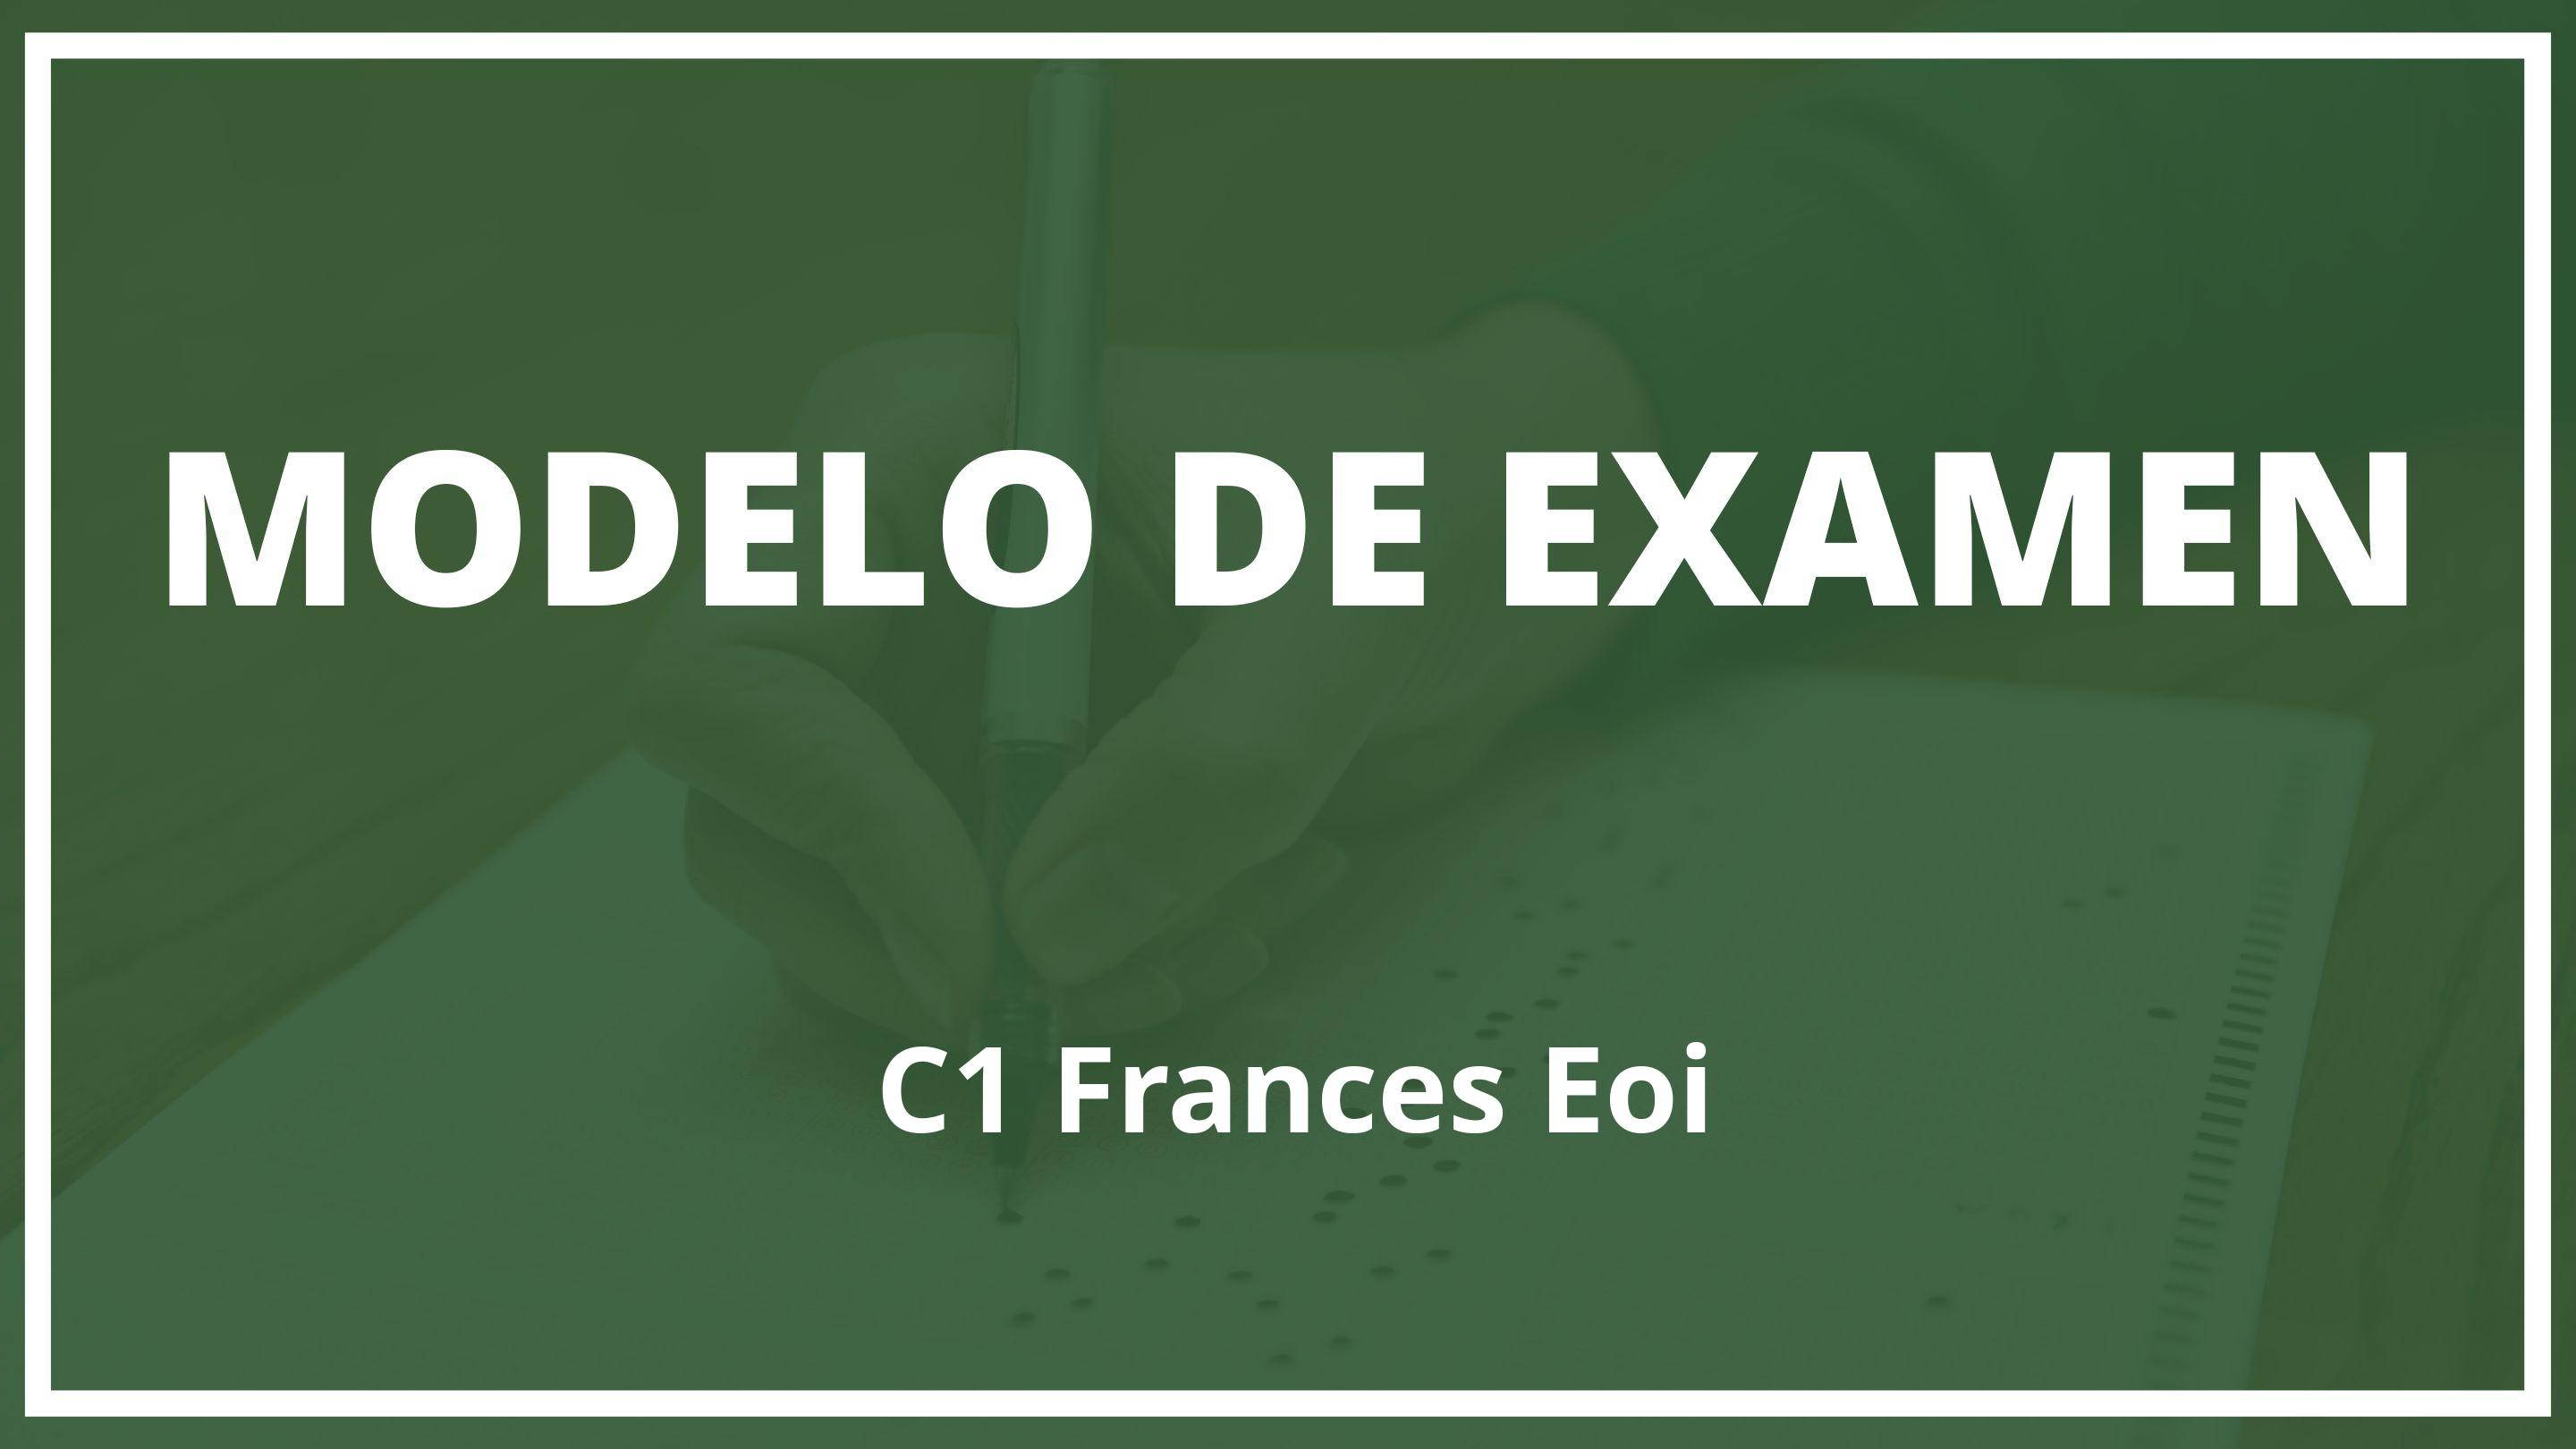 Examen C1 Frances Eoi